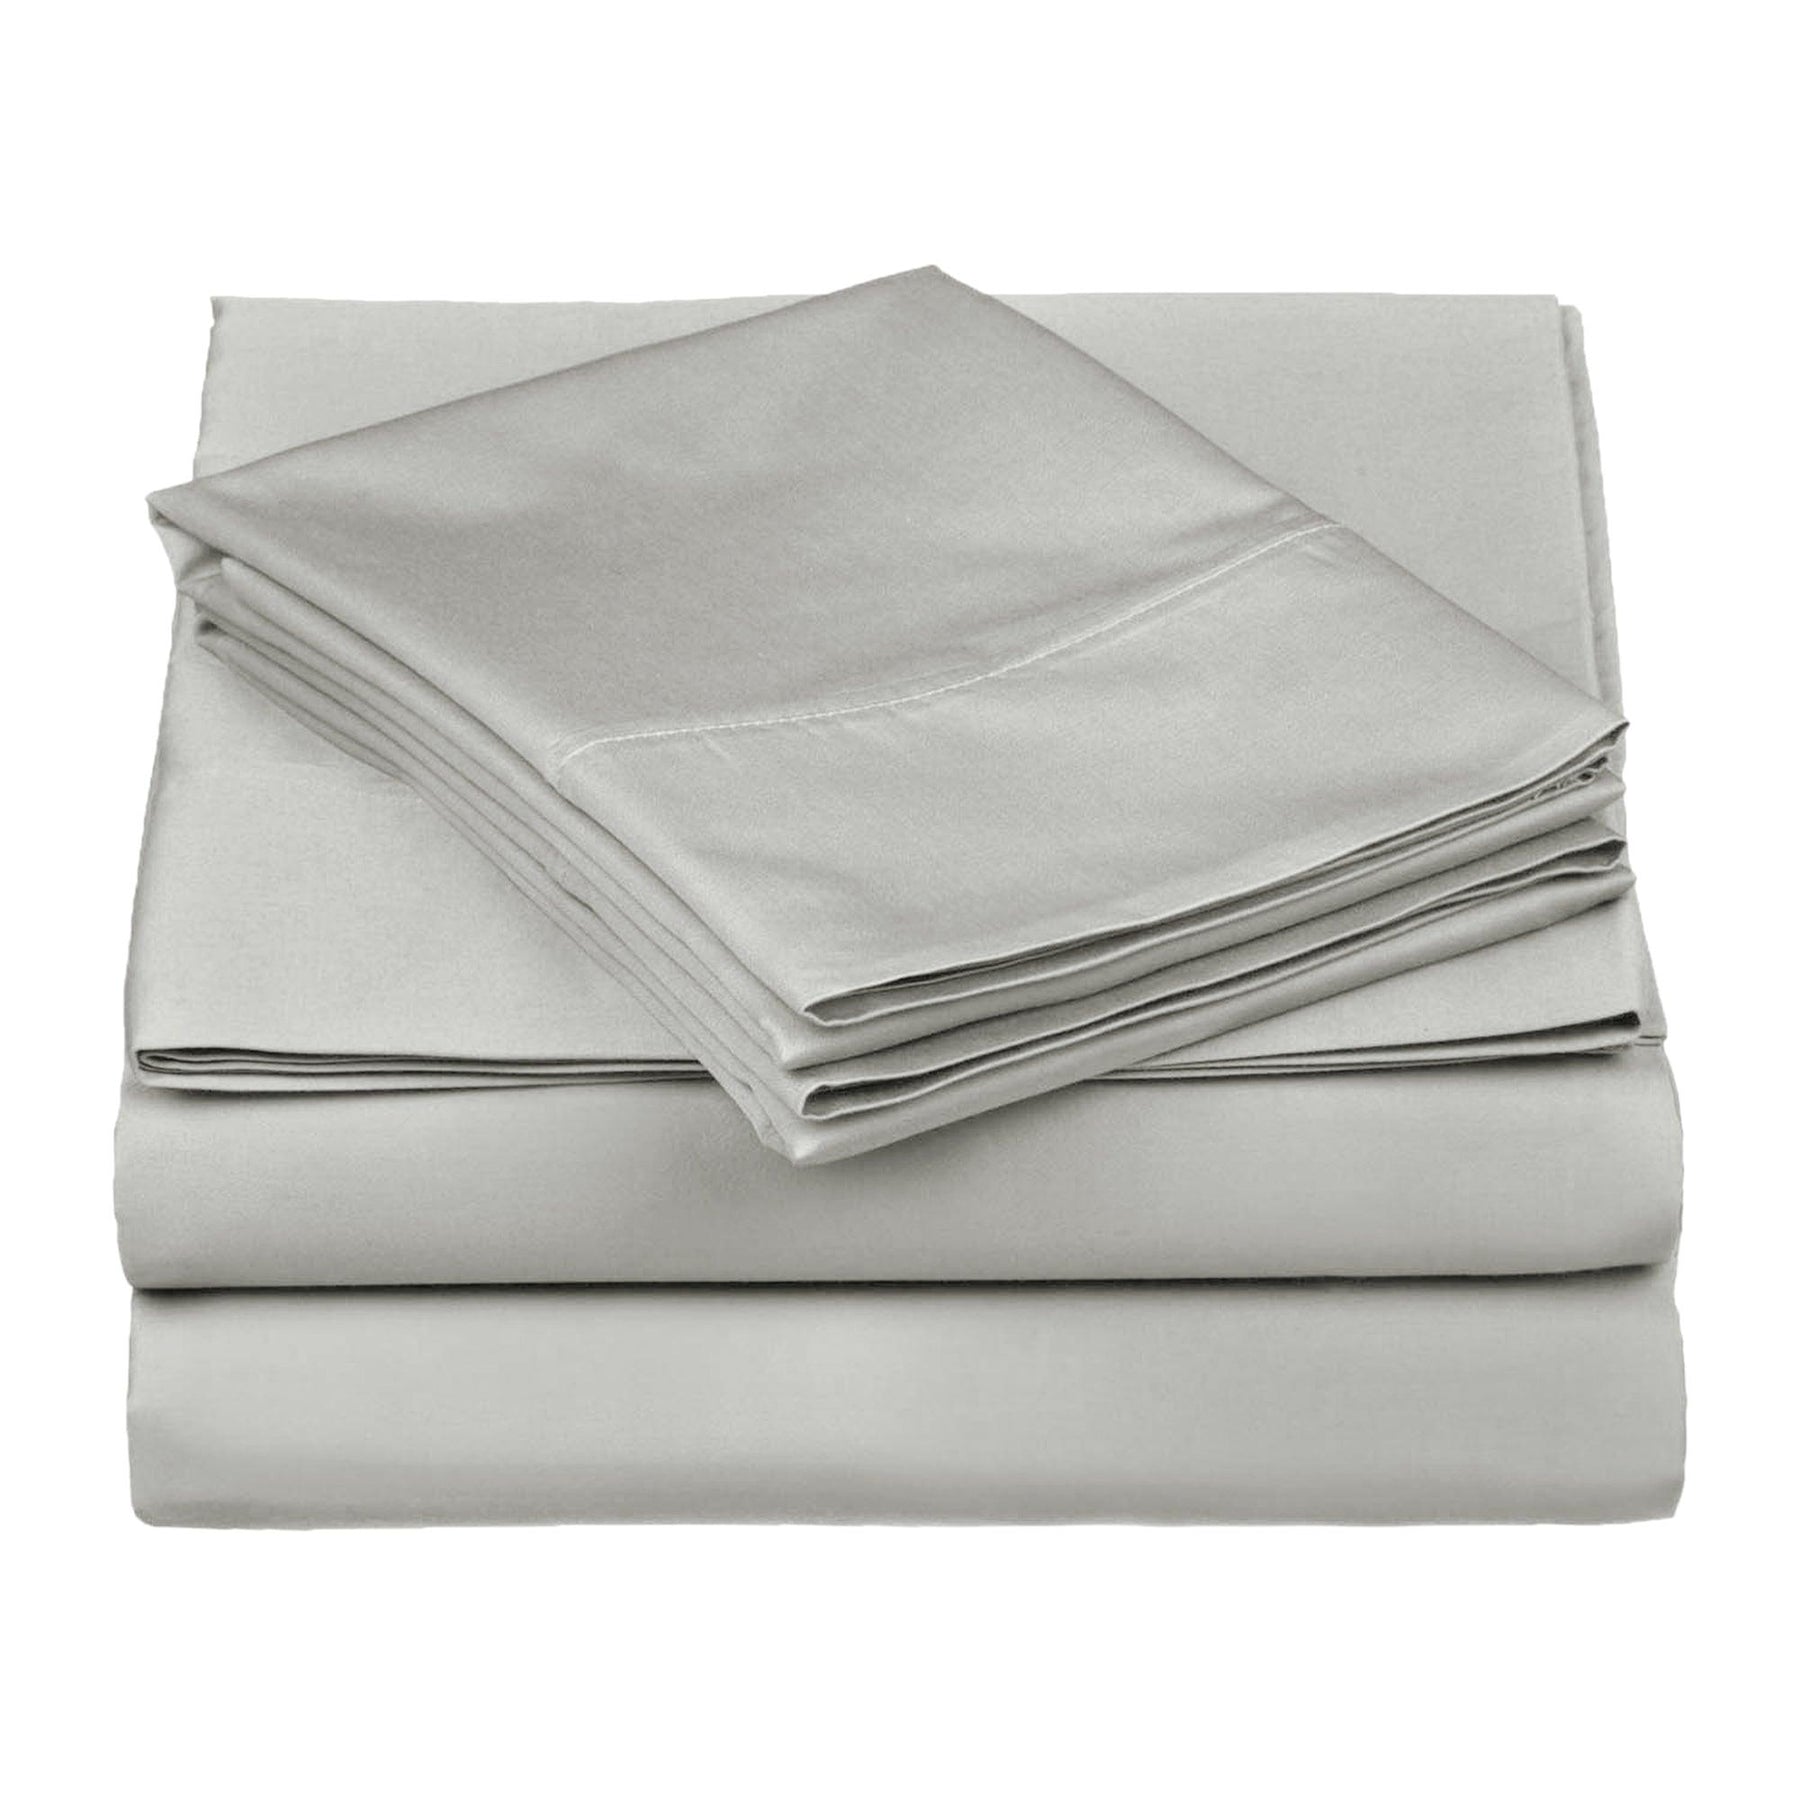  Superior Egyptian Cotton 530 Thread Count Solid Sheet Set - Platinum